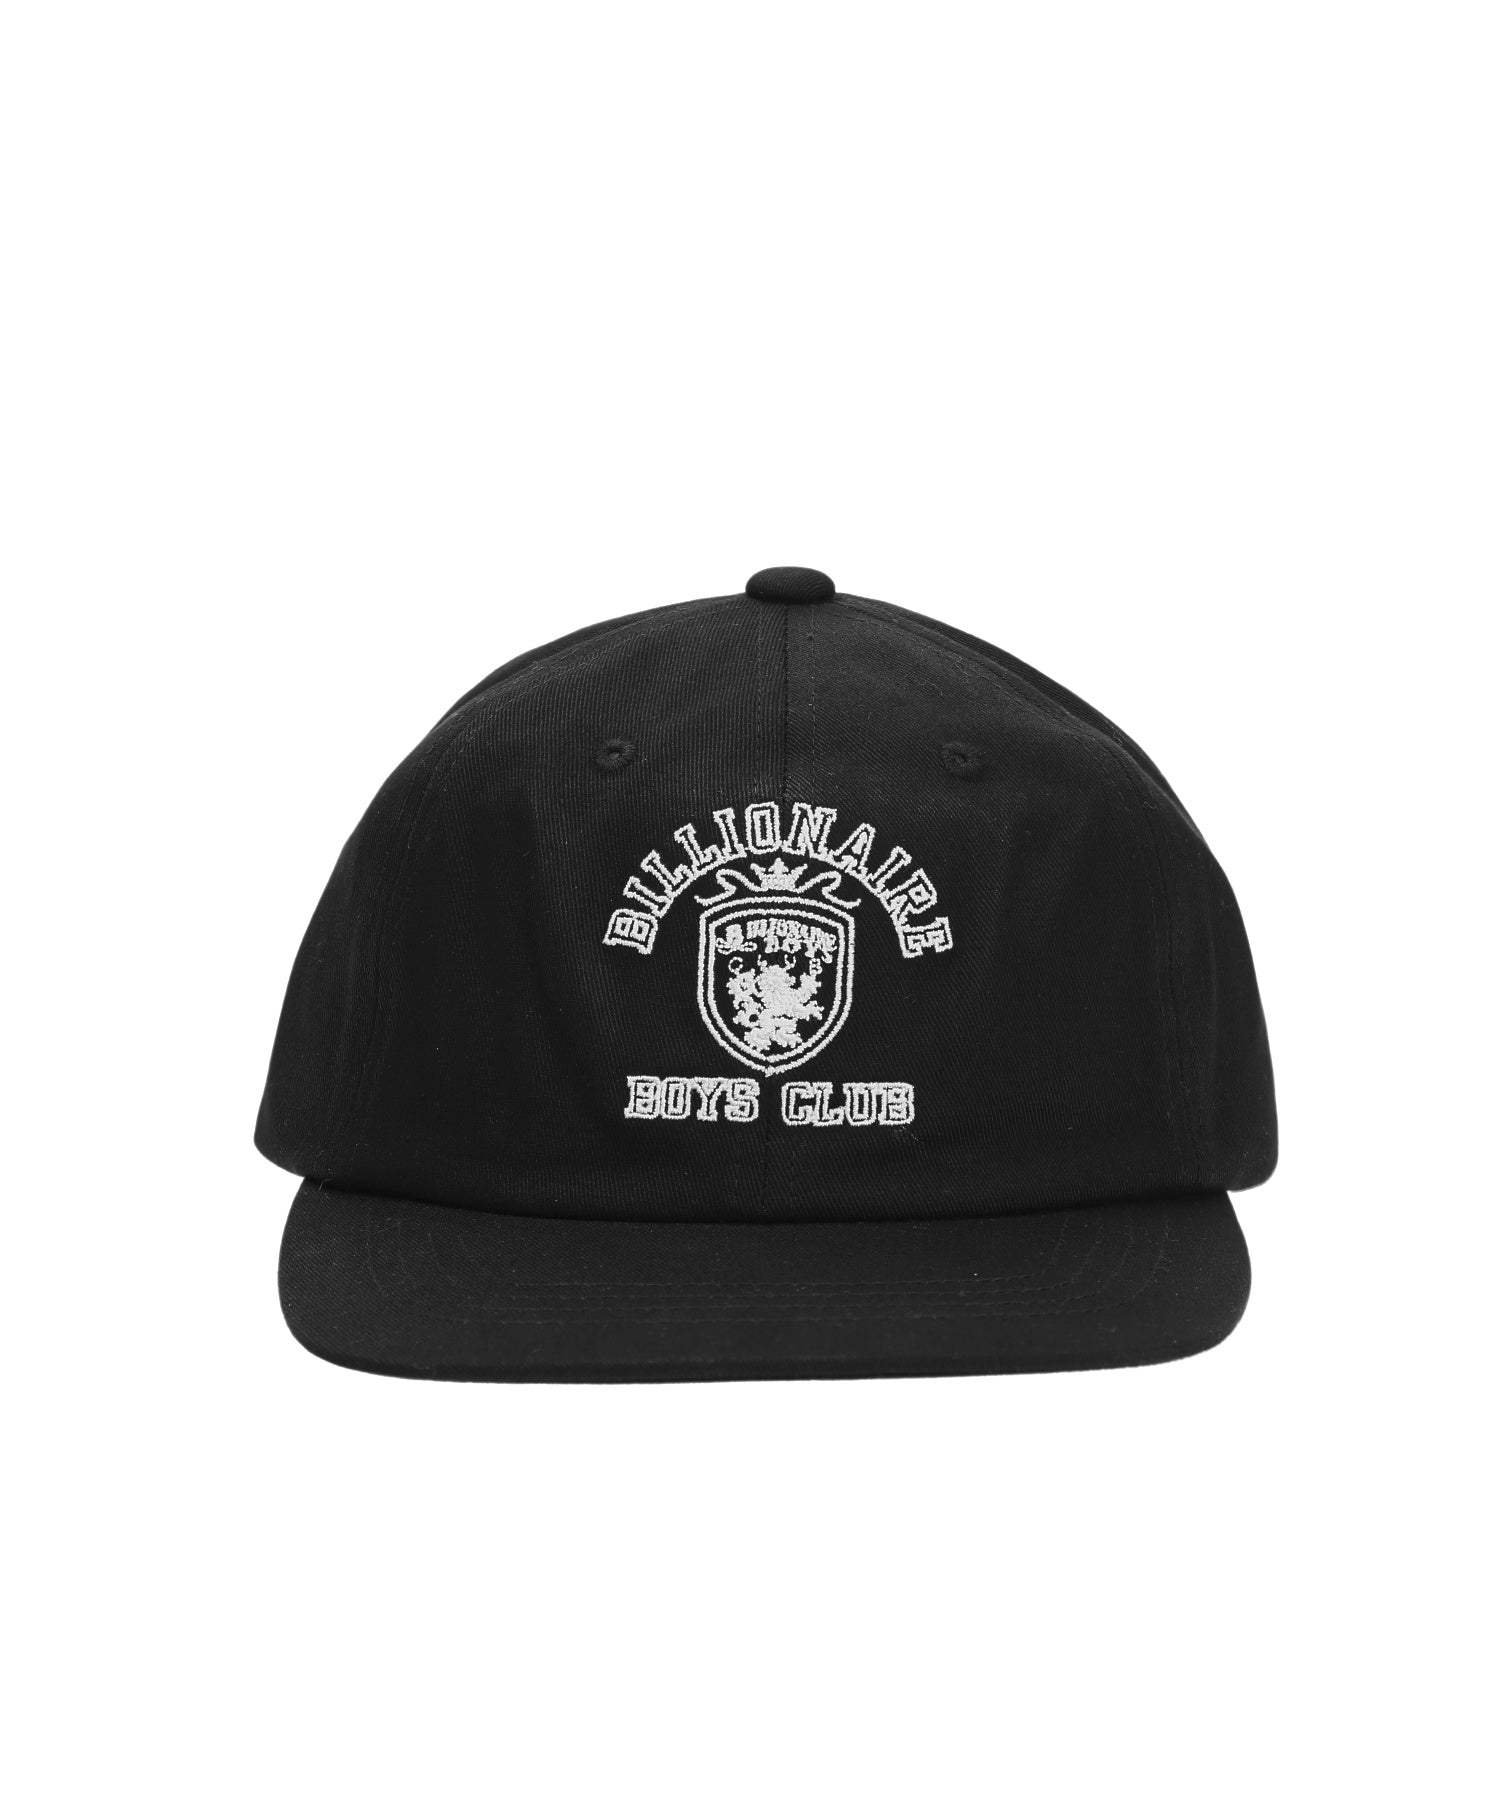 BILLIONAIRE BOYS CLUB/ビリオネア・ボーイズ・クラブ/EMBROIDERED LOGO COTTON CAP